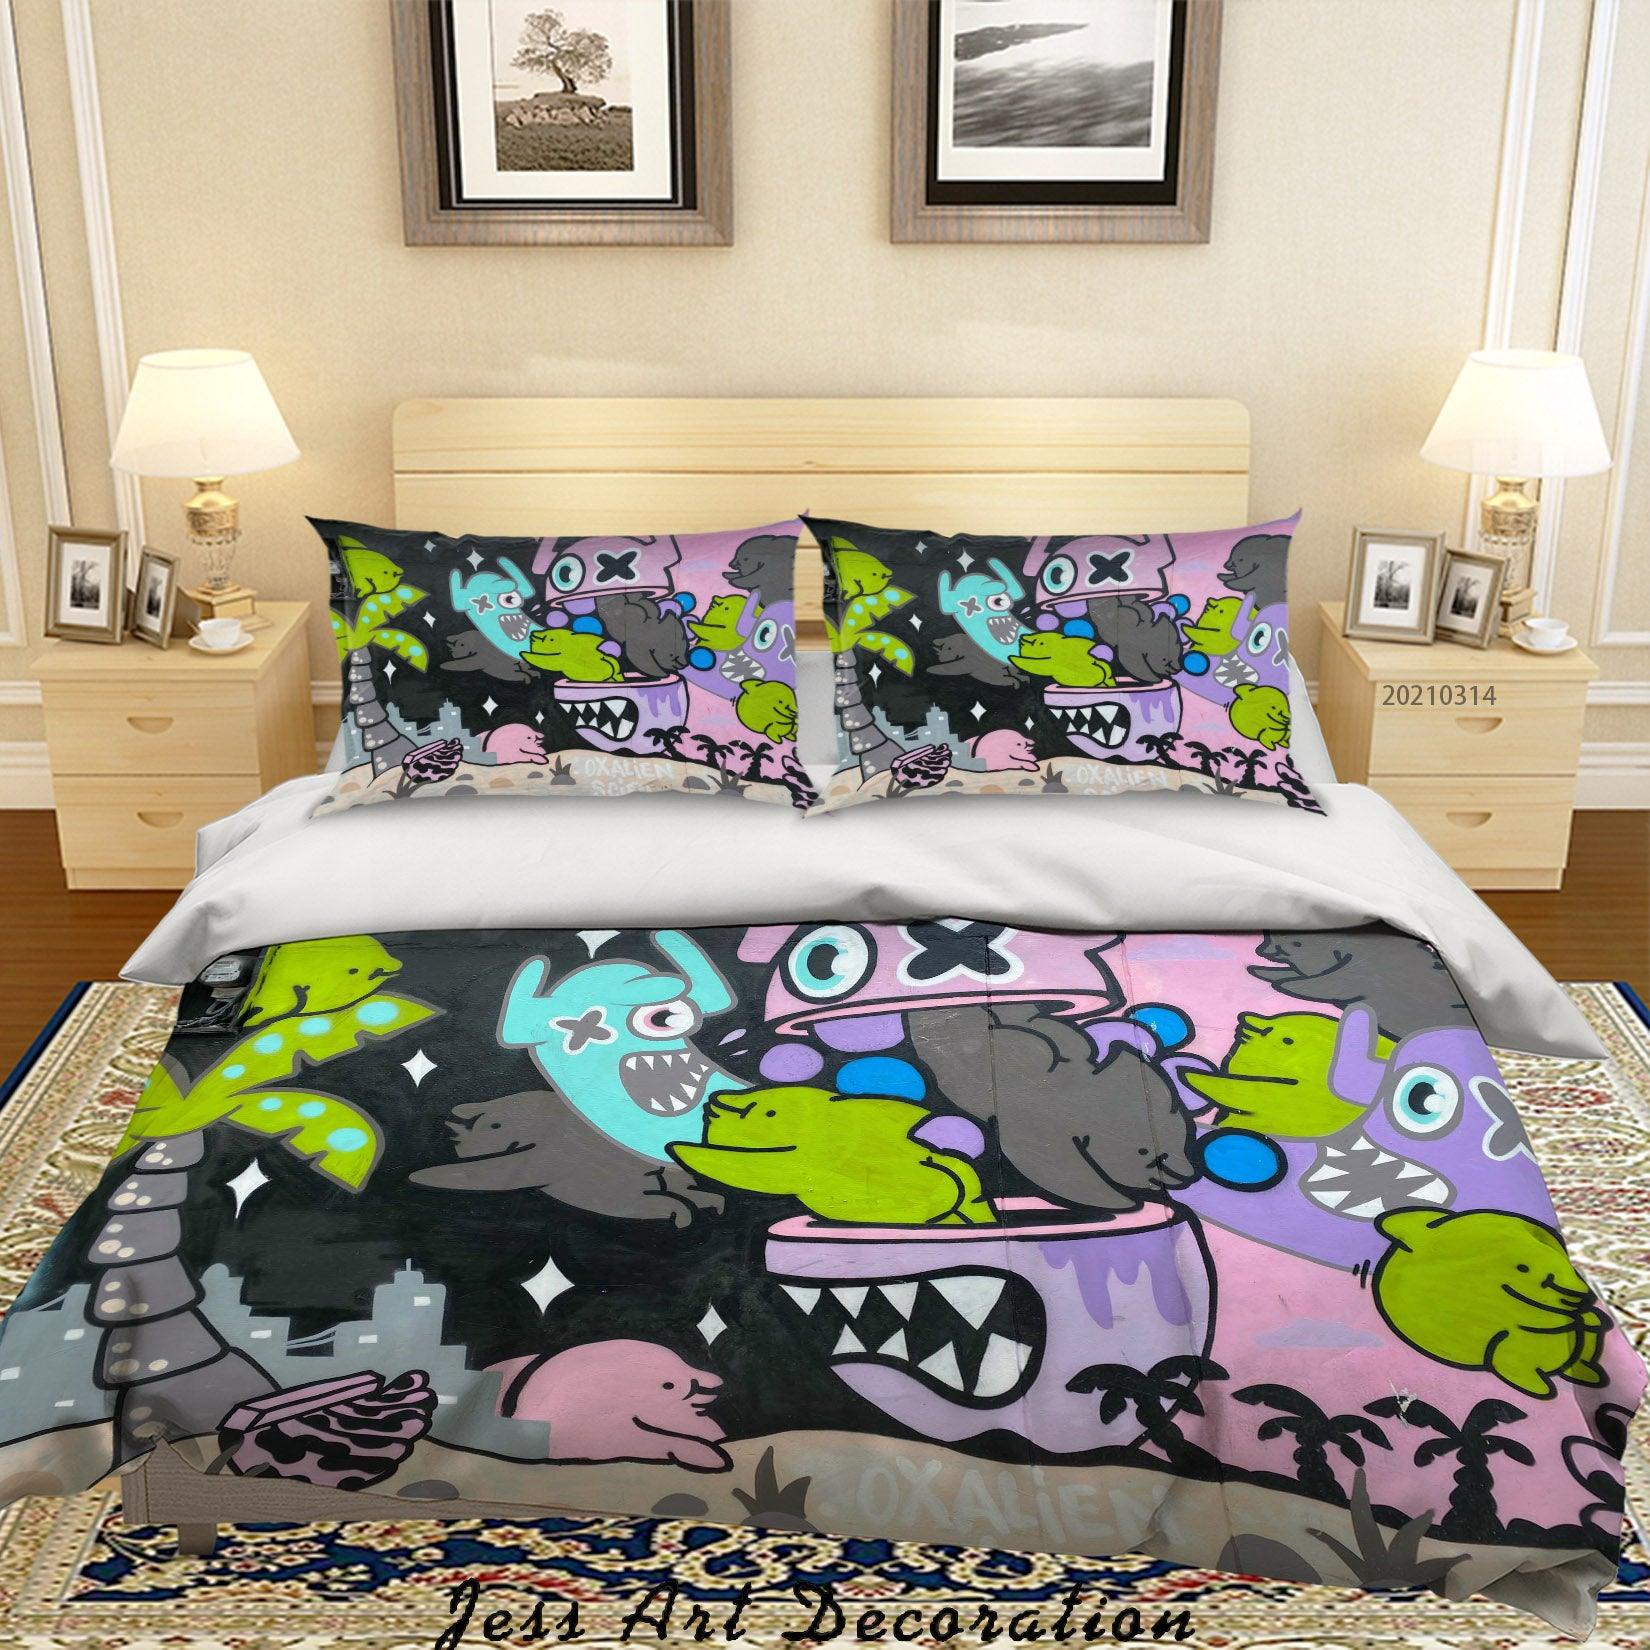 3D Abstract Colored Graffiti Monster Quilt Cover Set Bedding Set Duvet Cover Pillowcases 159- Jess Art Decoration